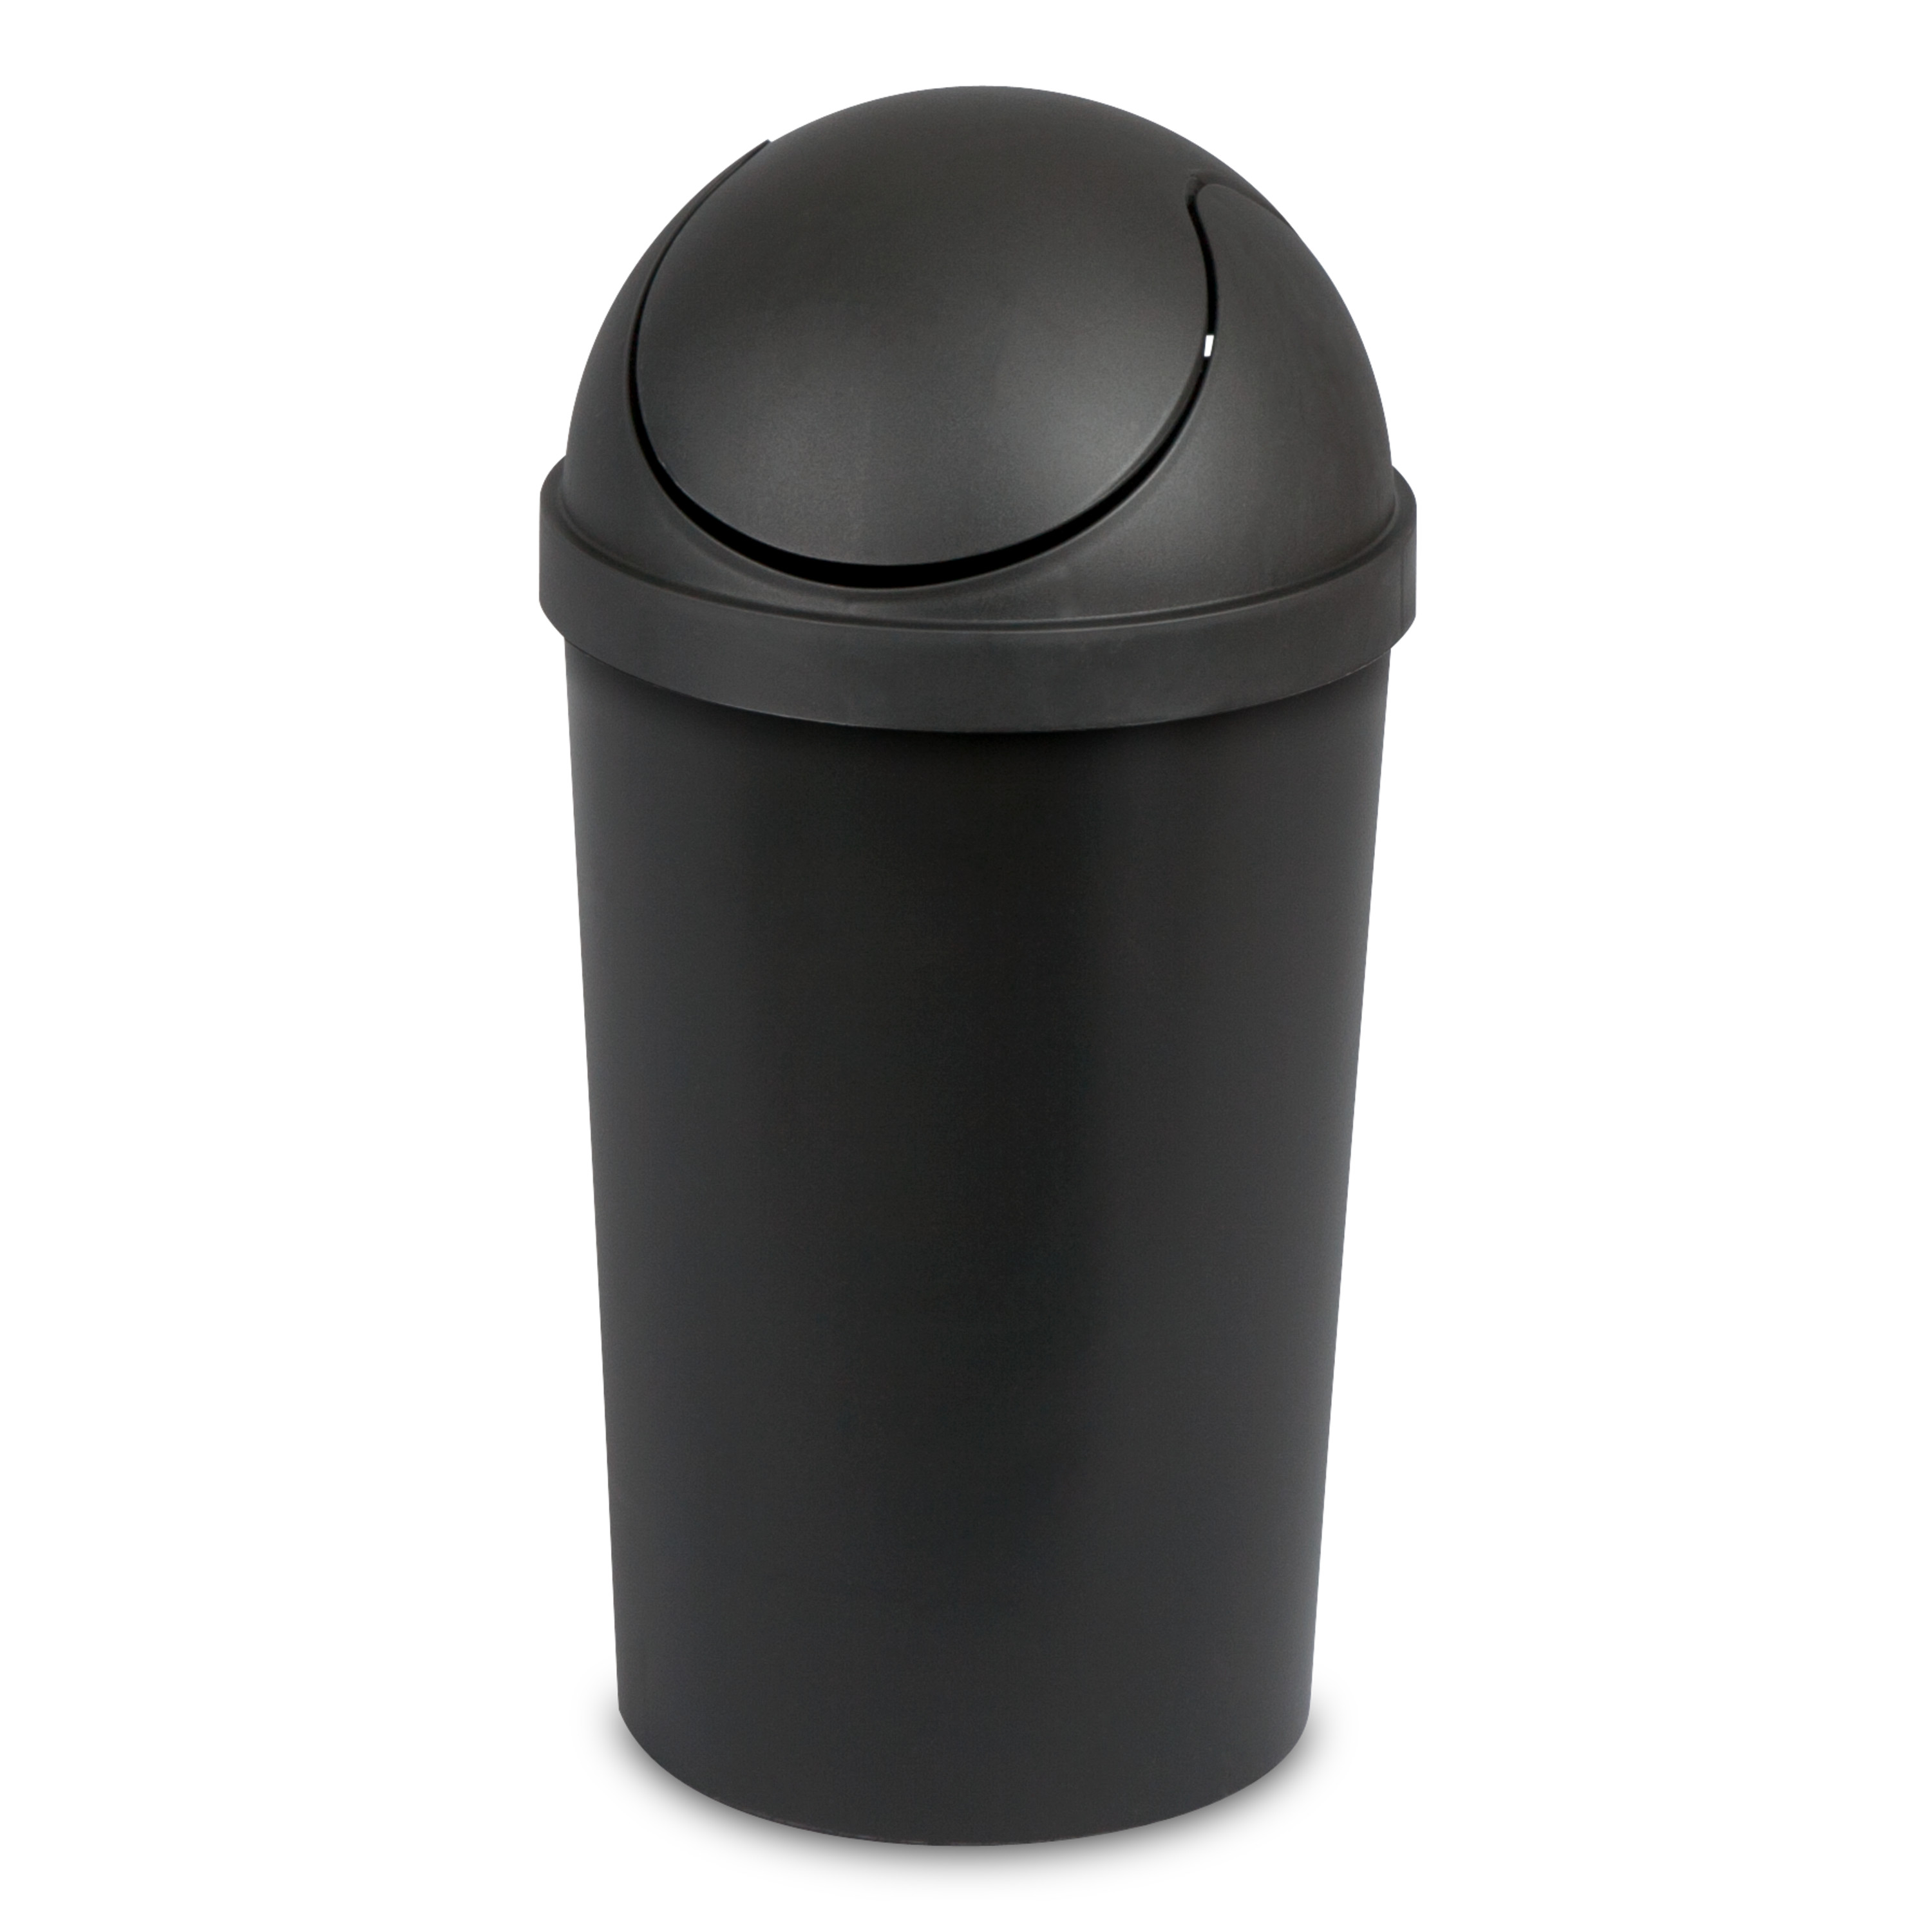 Sterilite 3 Gal. Round SwingTop Wastebasket Plastic, Black - image 1 of 9